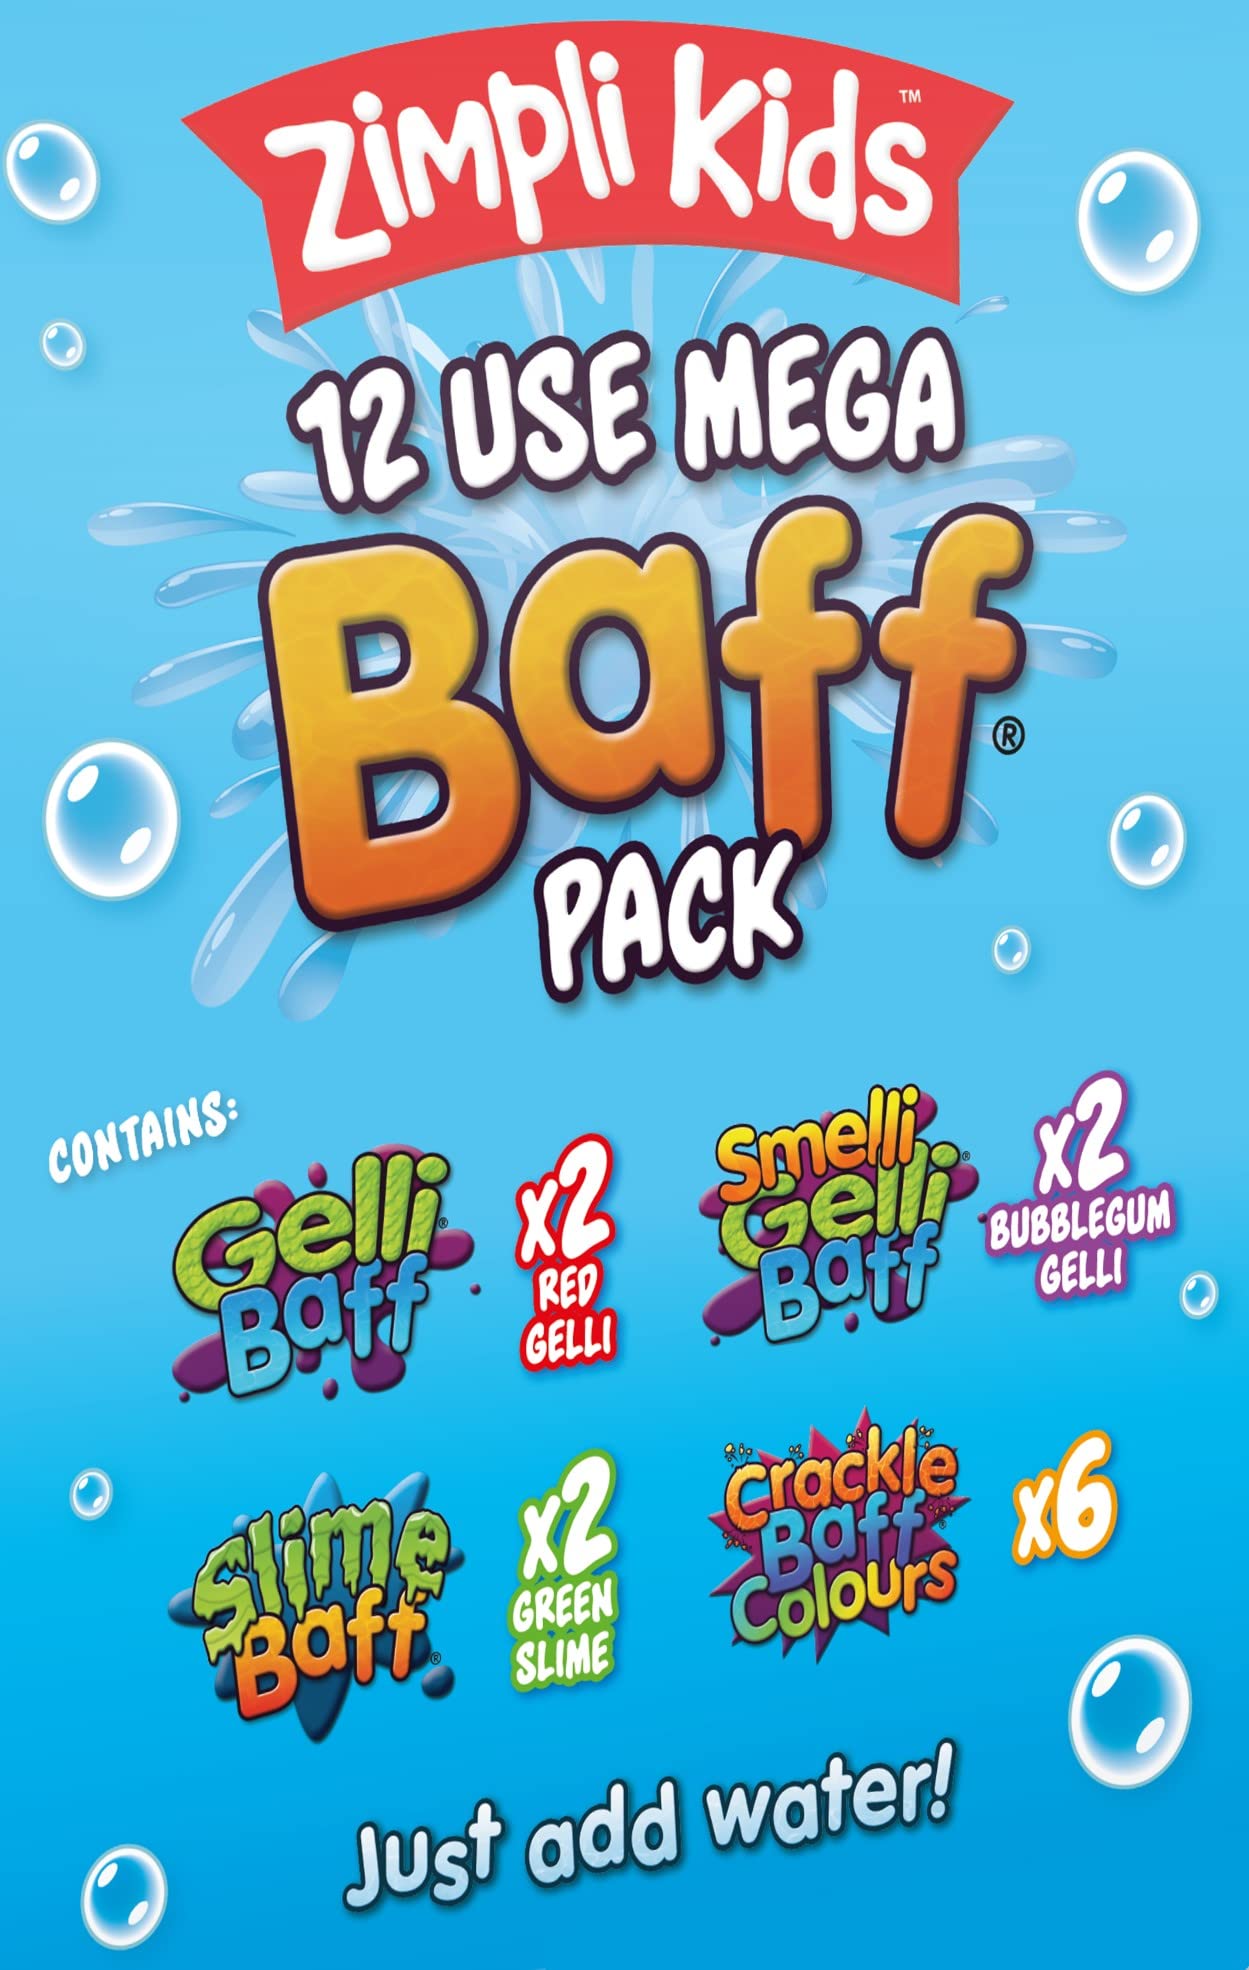 12 Use Mega Value Baff Pack from Zimpli Kids, 4 x Gelli Baff, 2 x Slime Baff & 6 x Crackle Baff, Children's Sensory & Bath Toy, Birthday Presents for Boys & Girls, Certified Biodegradable Gift